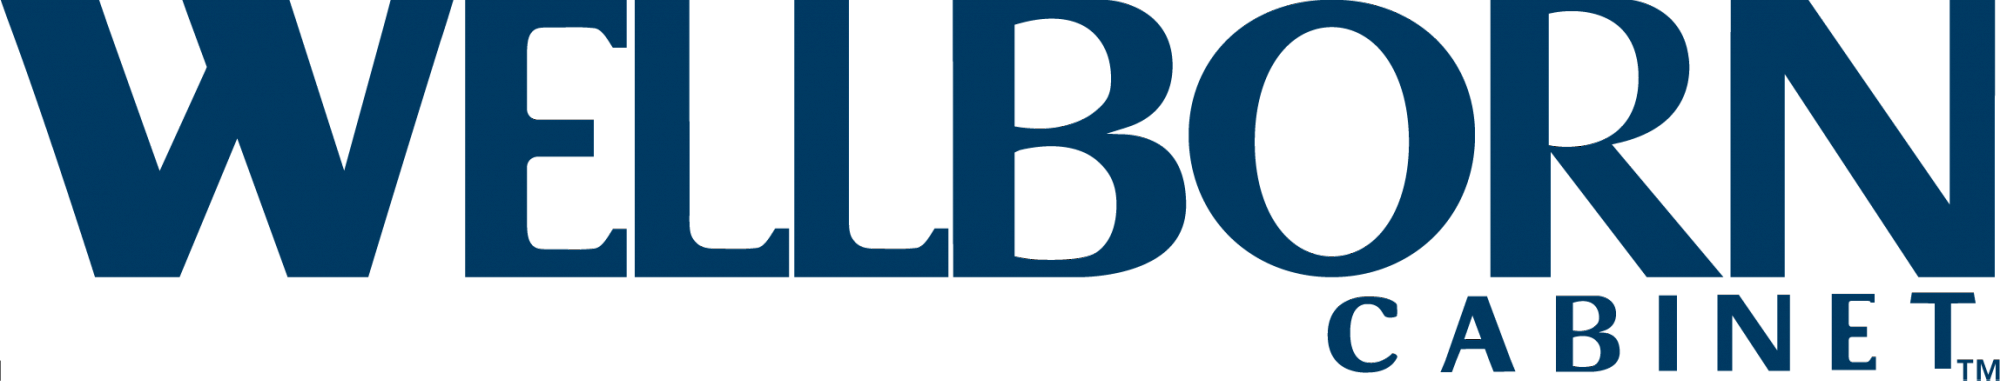 Wellborn Cabinet Logo